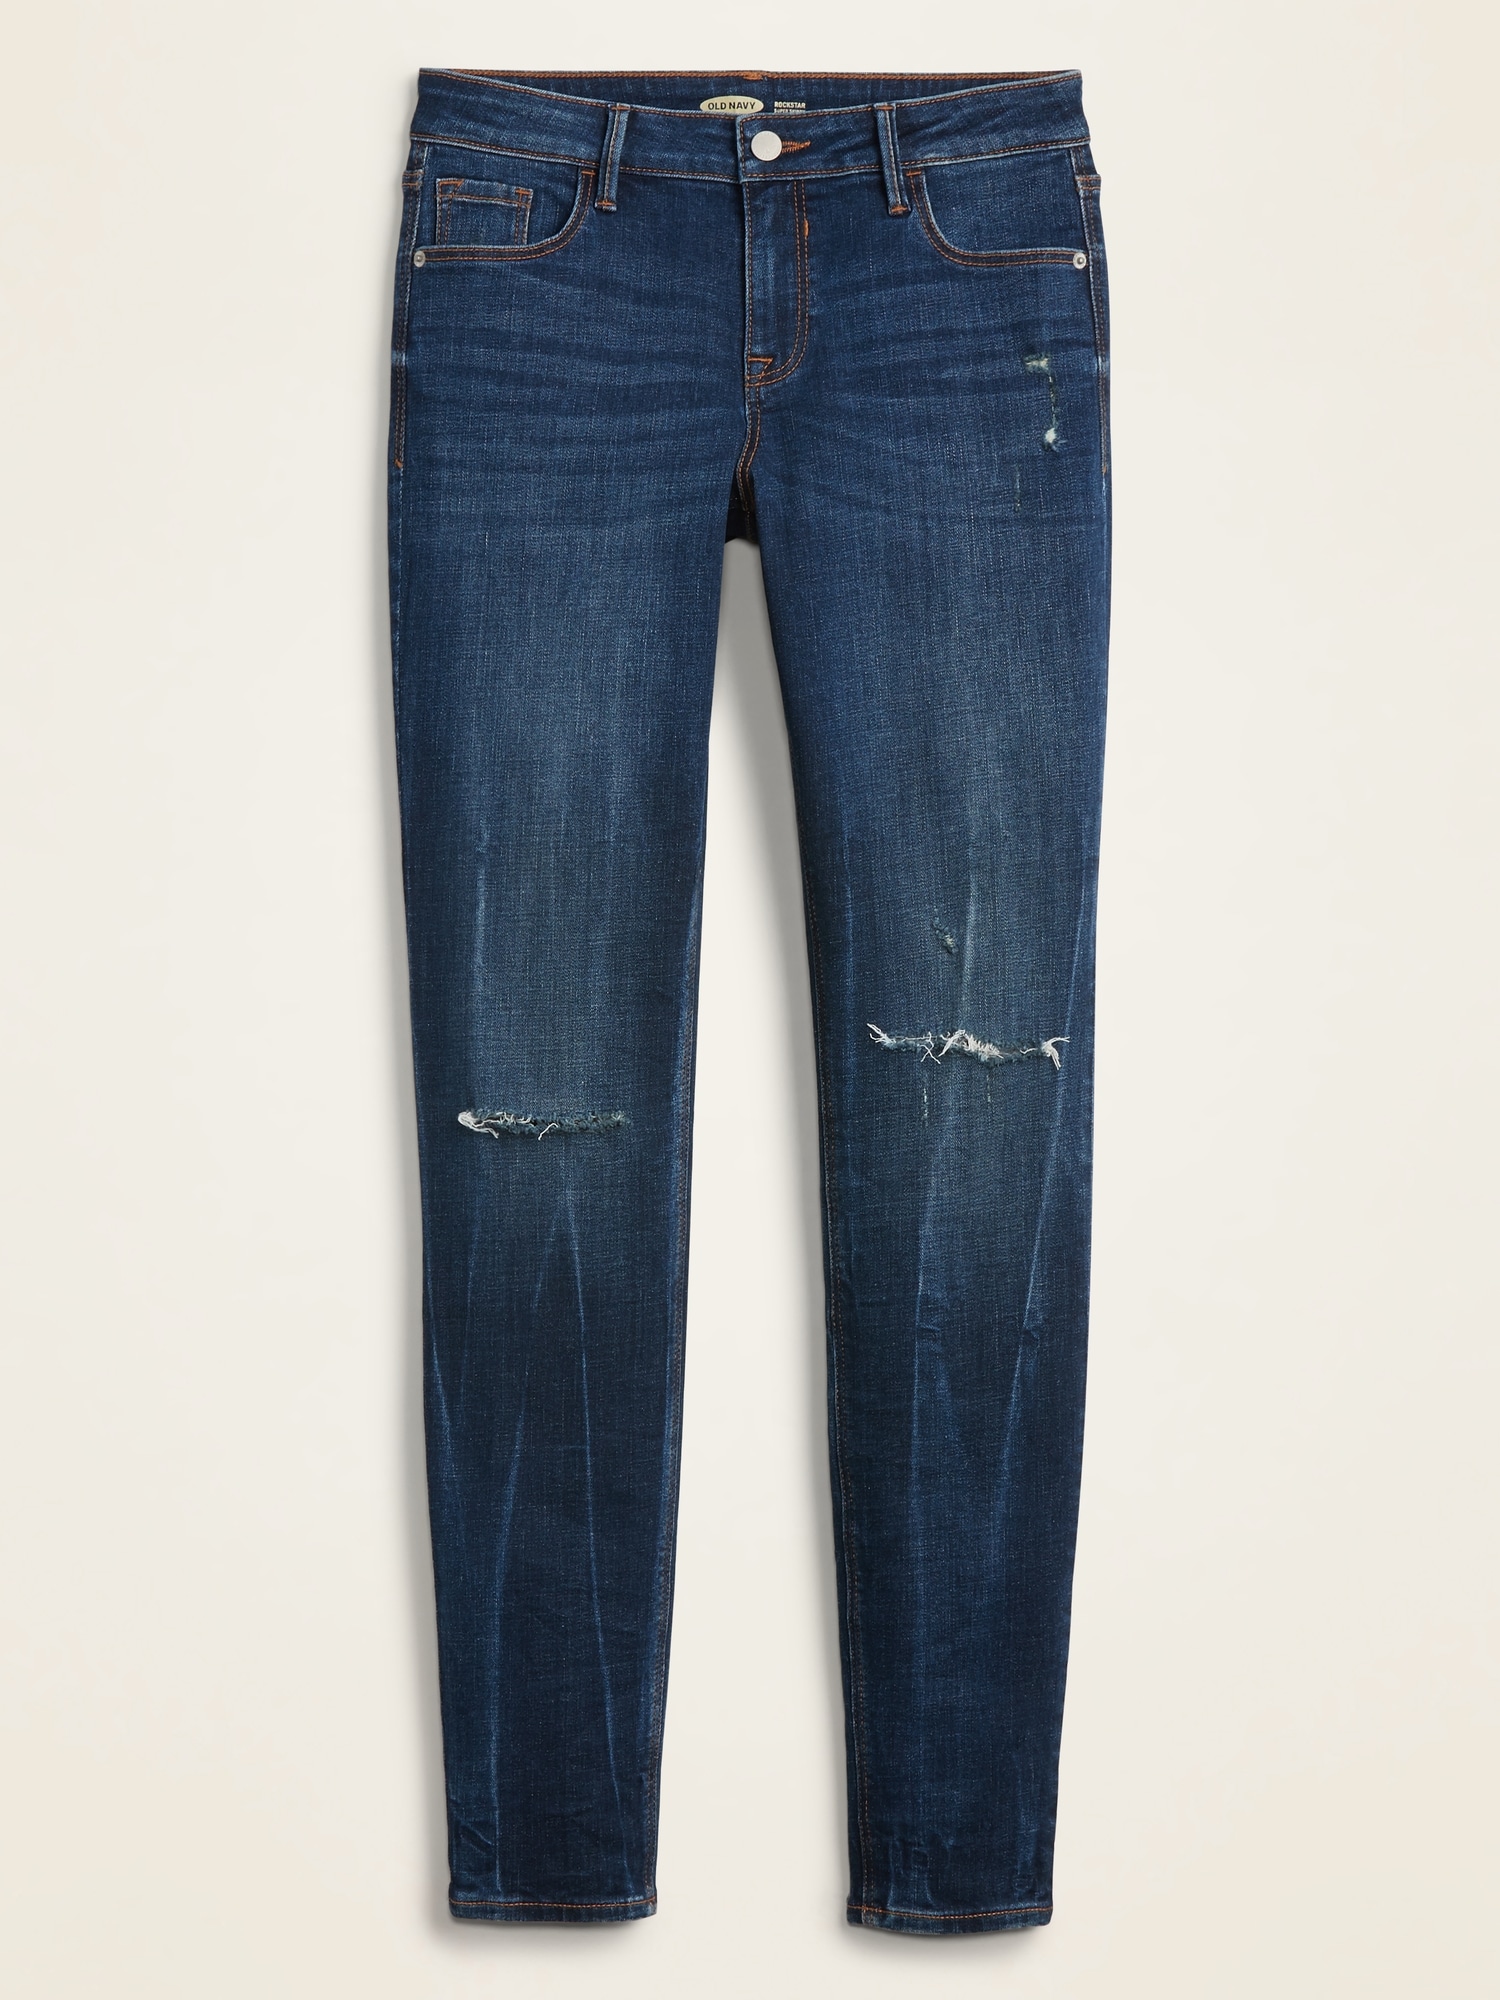 old navy jeans super skinny